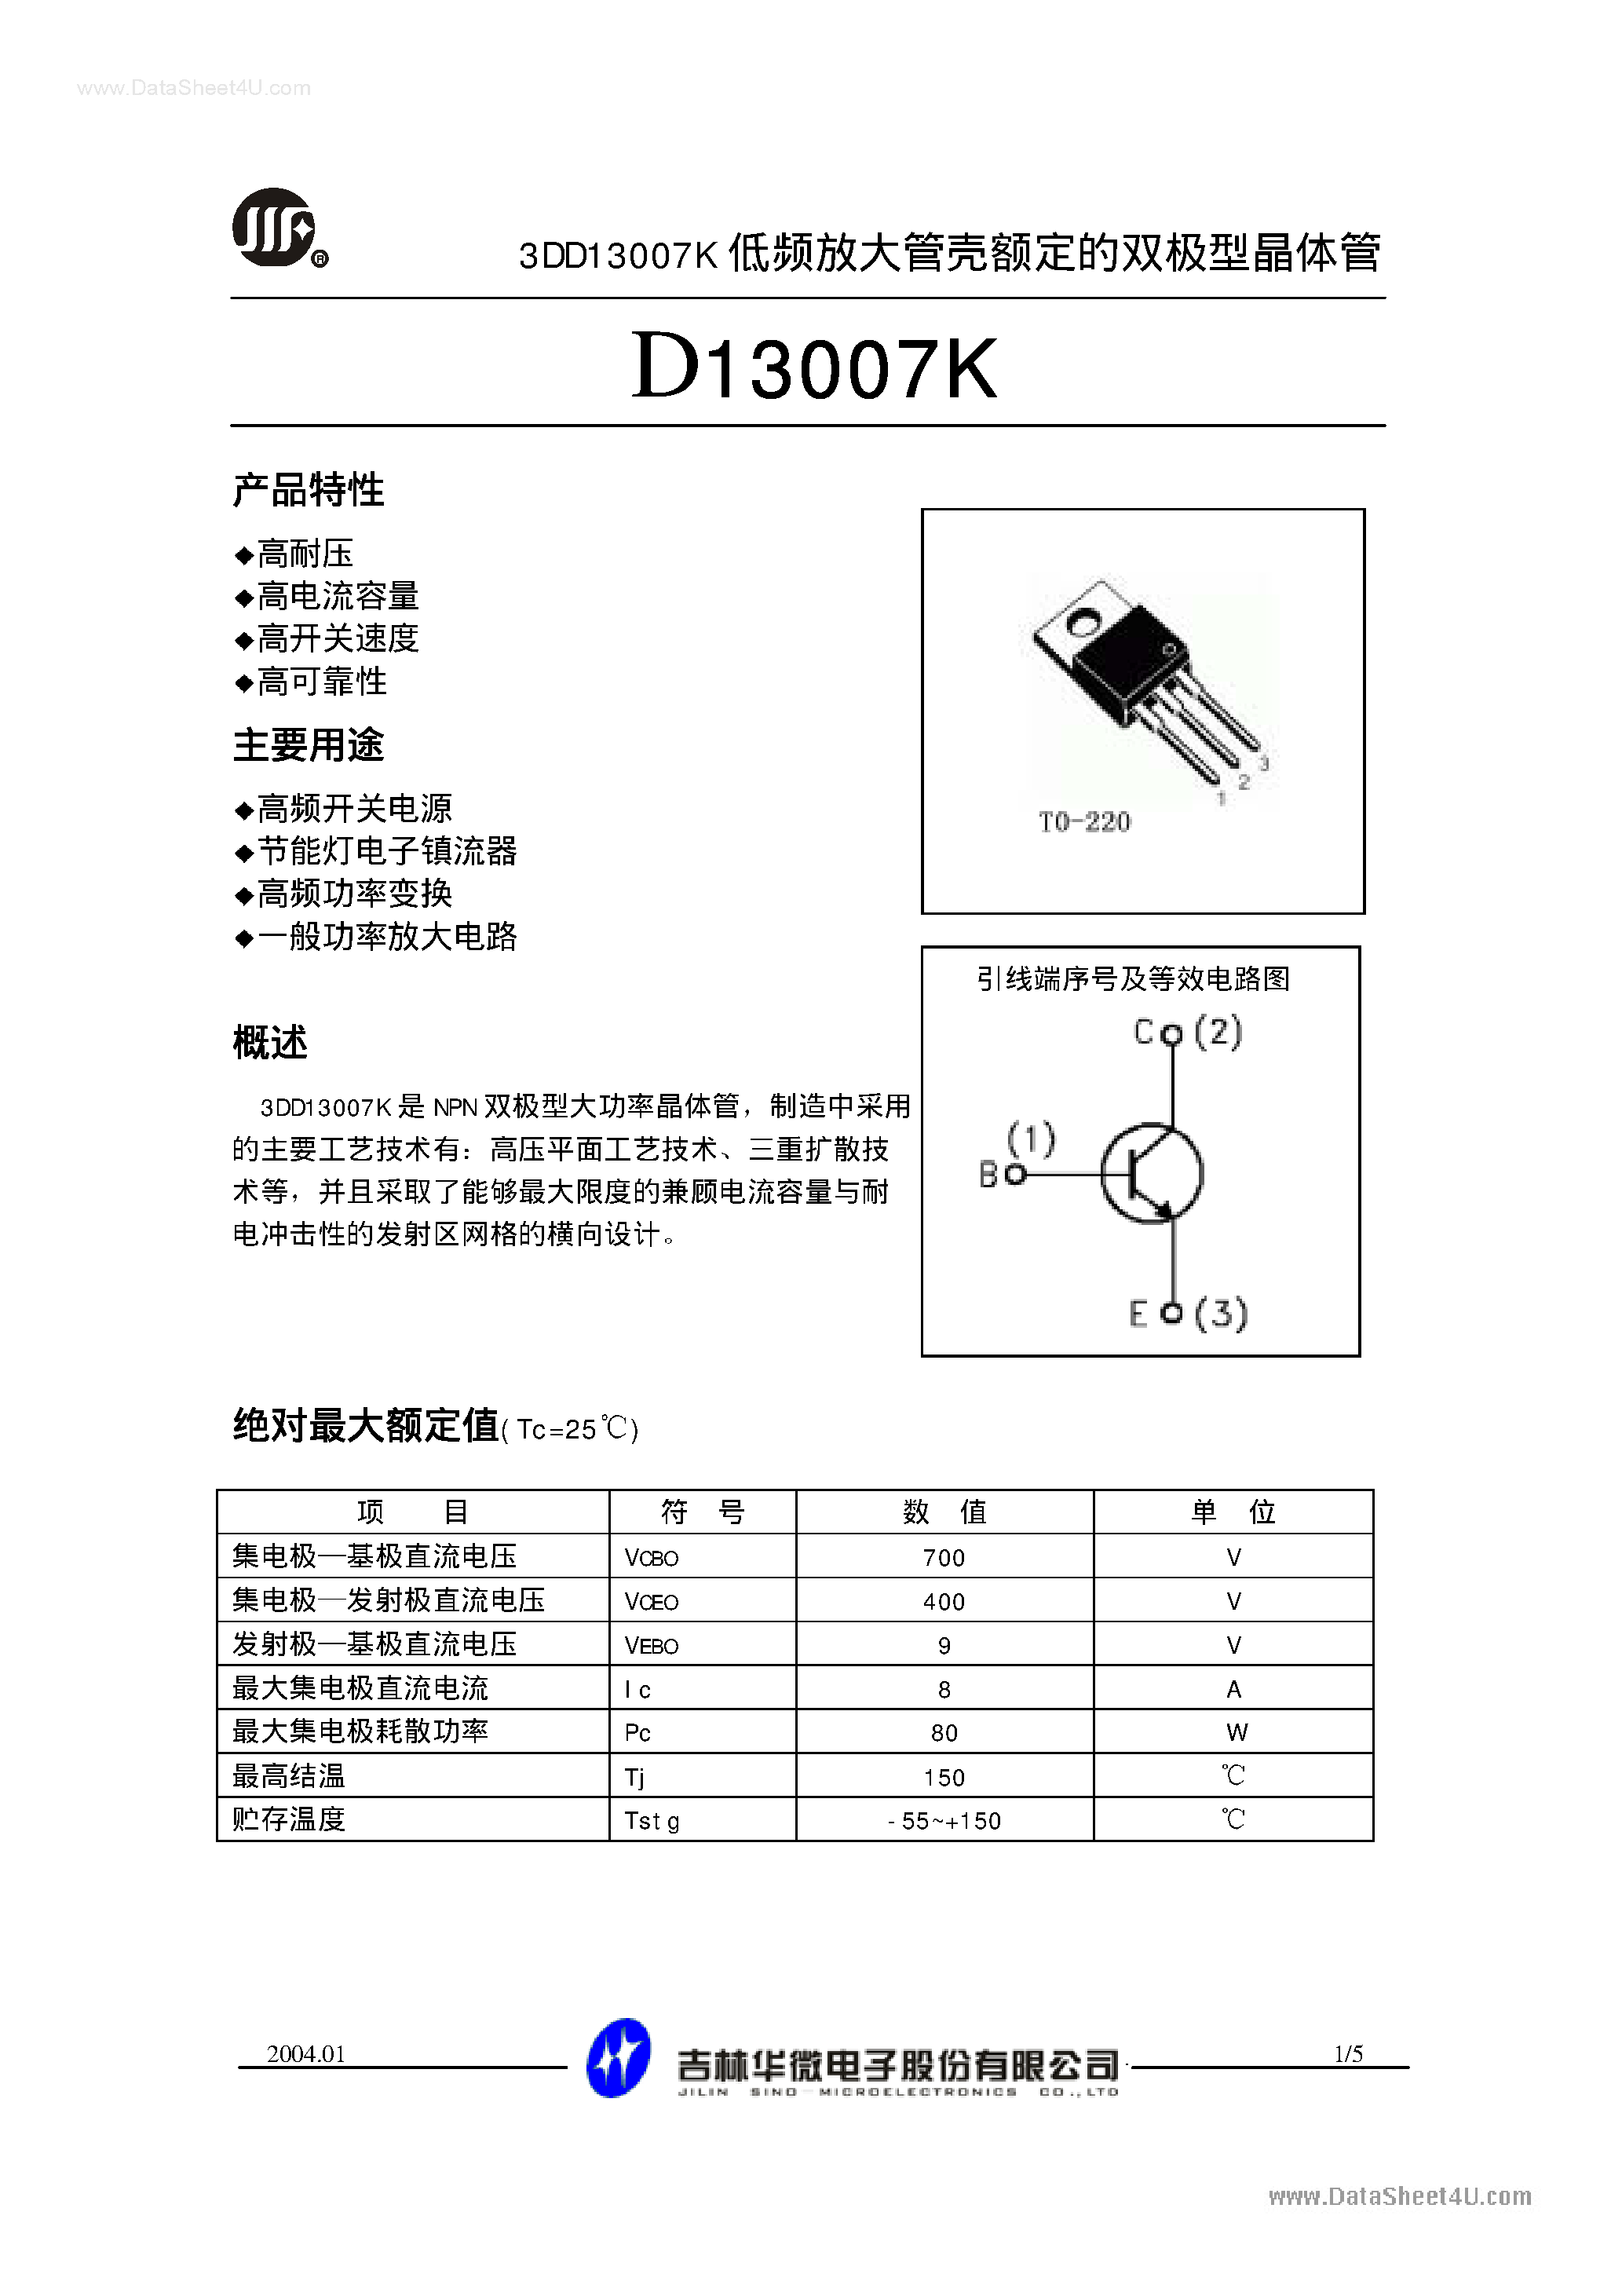 Datasheet D13007K - 3DDD13007K page 1